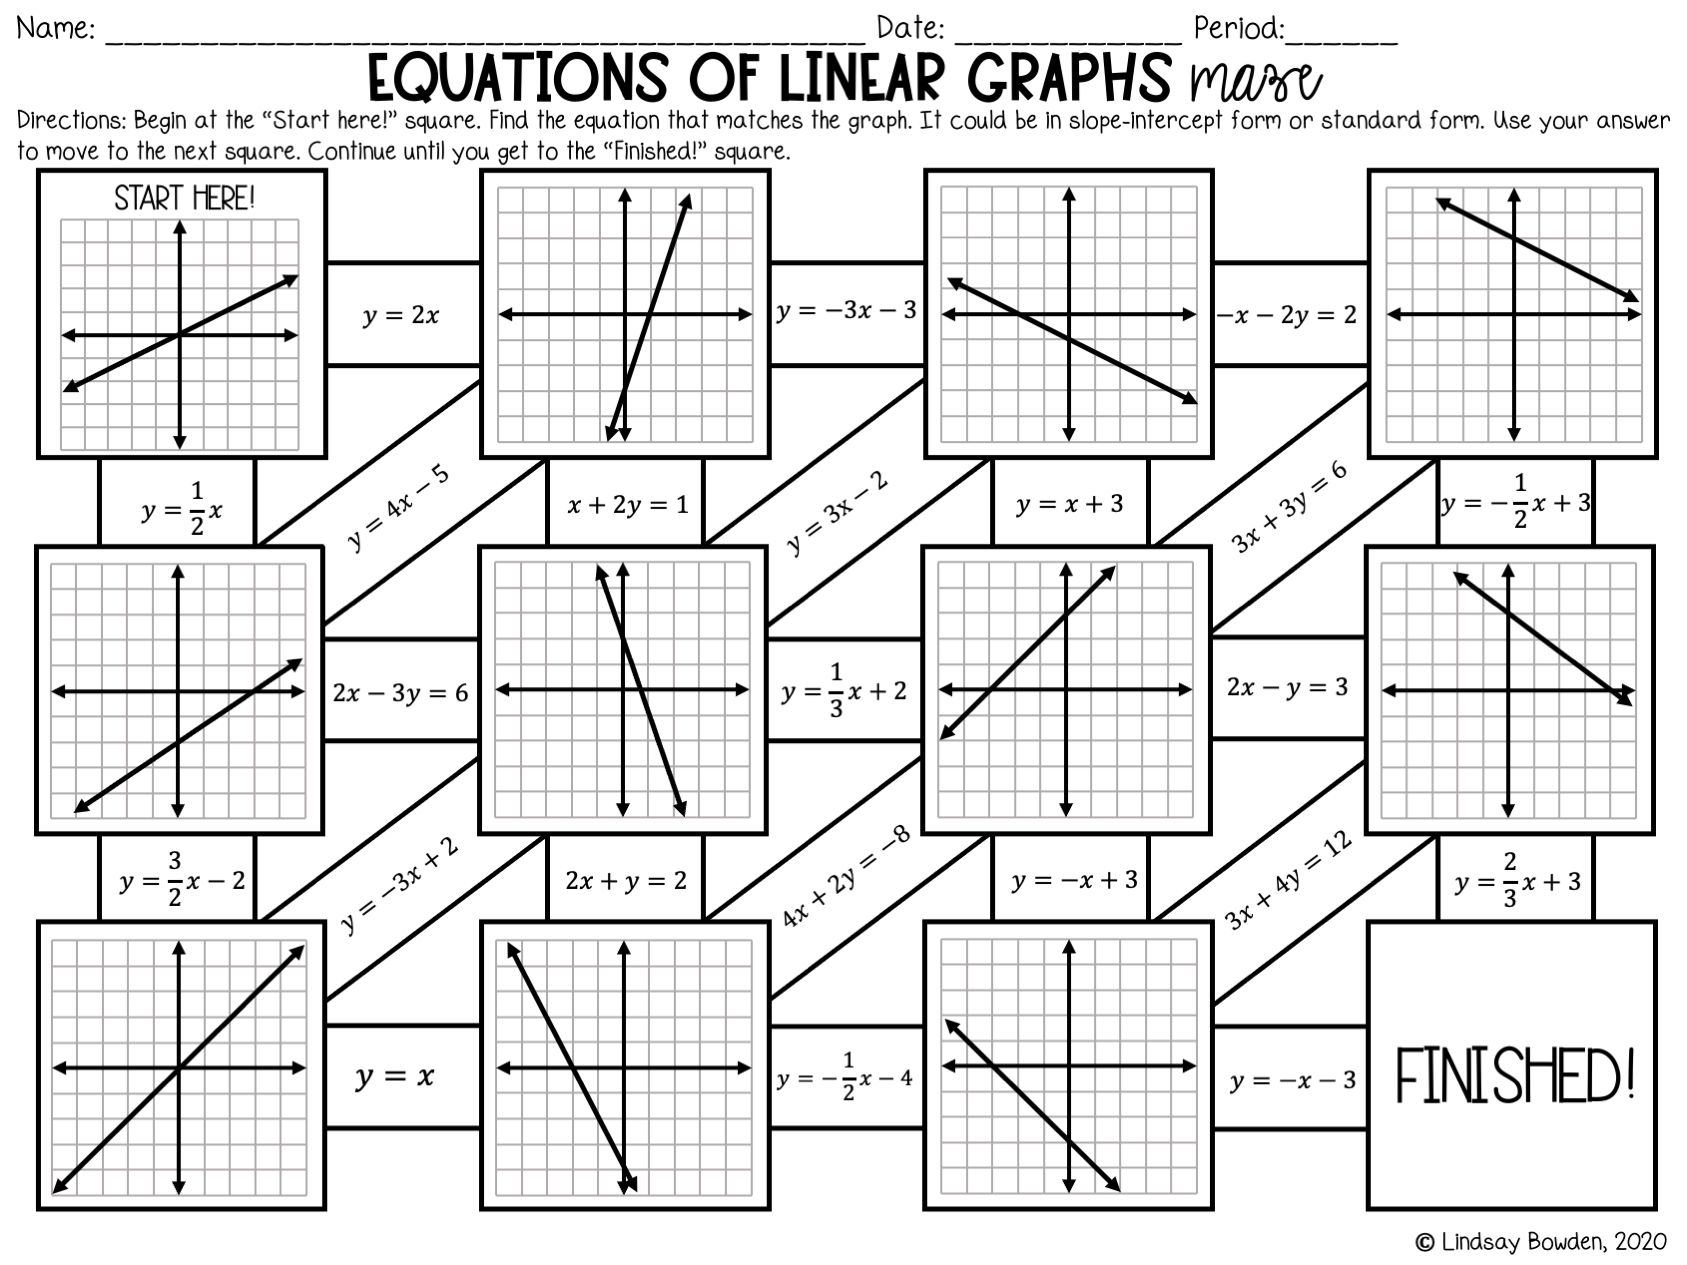 linear-graphs-maze-lindsay-bowden